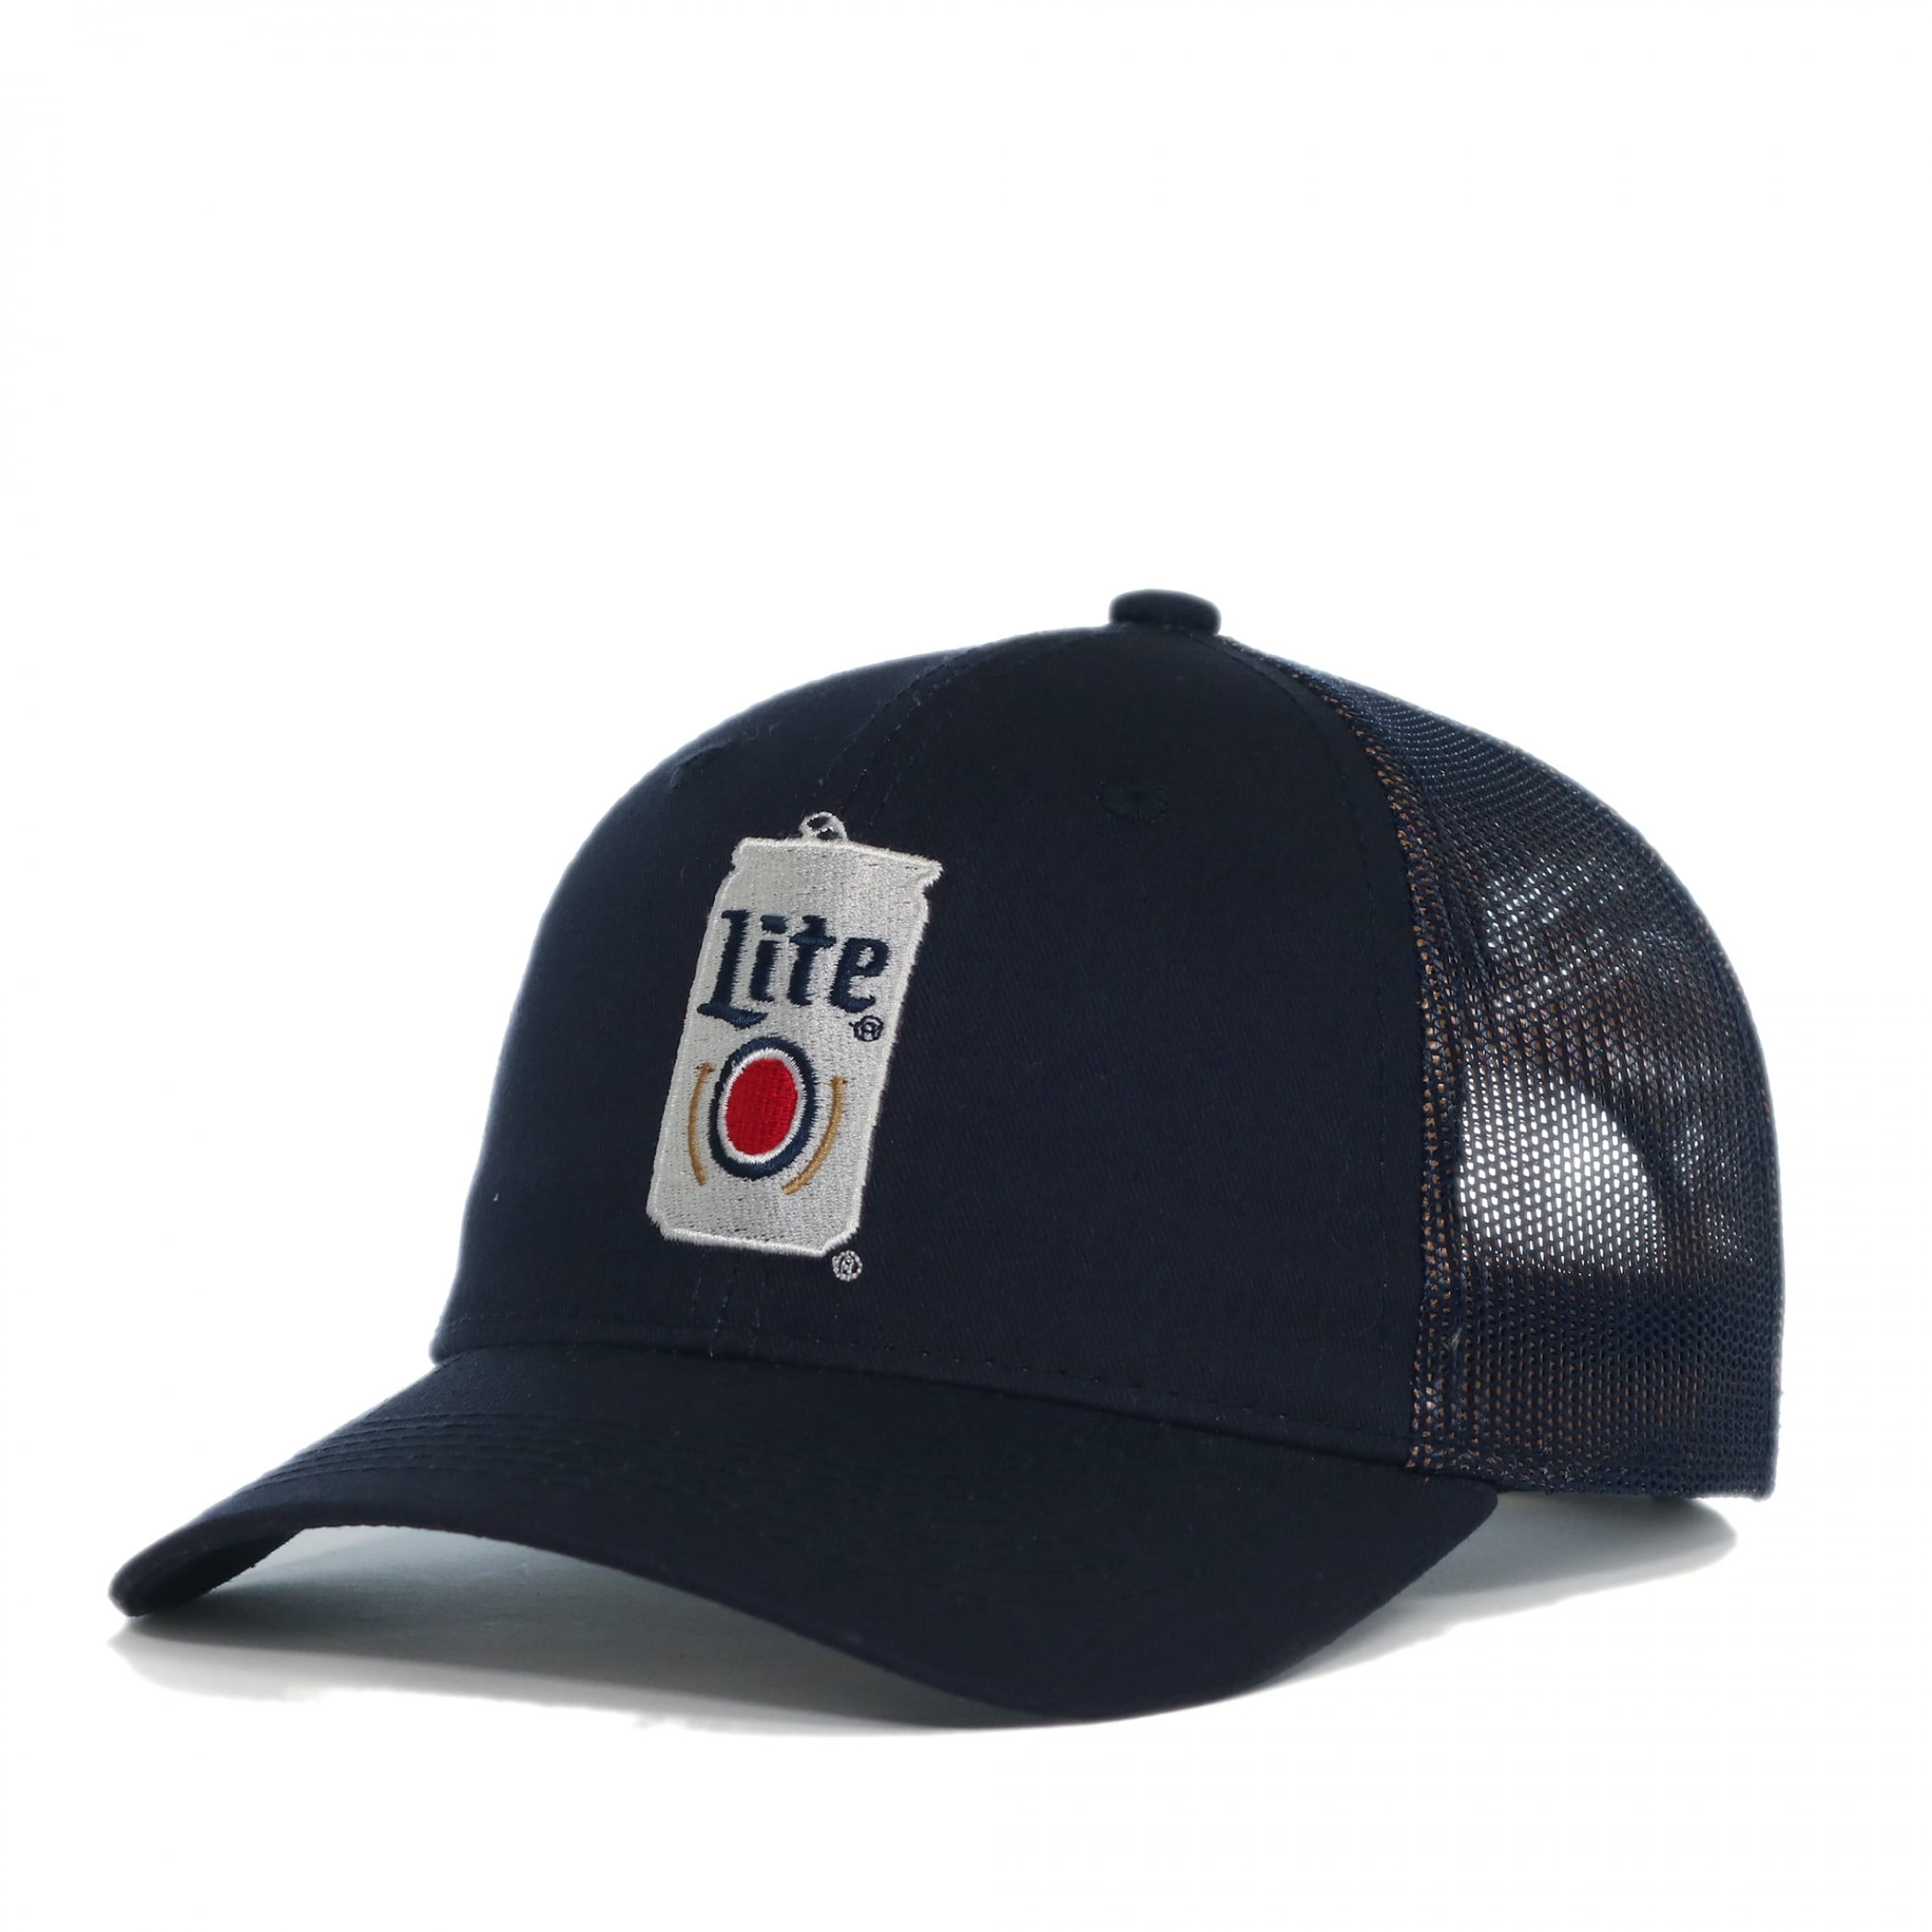 Baseball All Cotton Classic Stylish Hat Unisex Womens Miller-Lite-Miller-Logo 